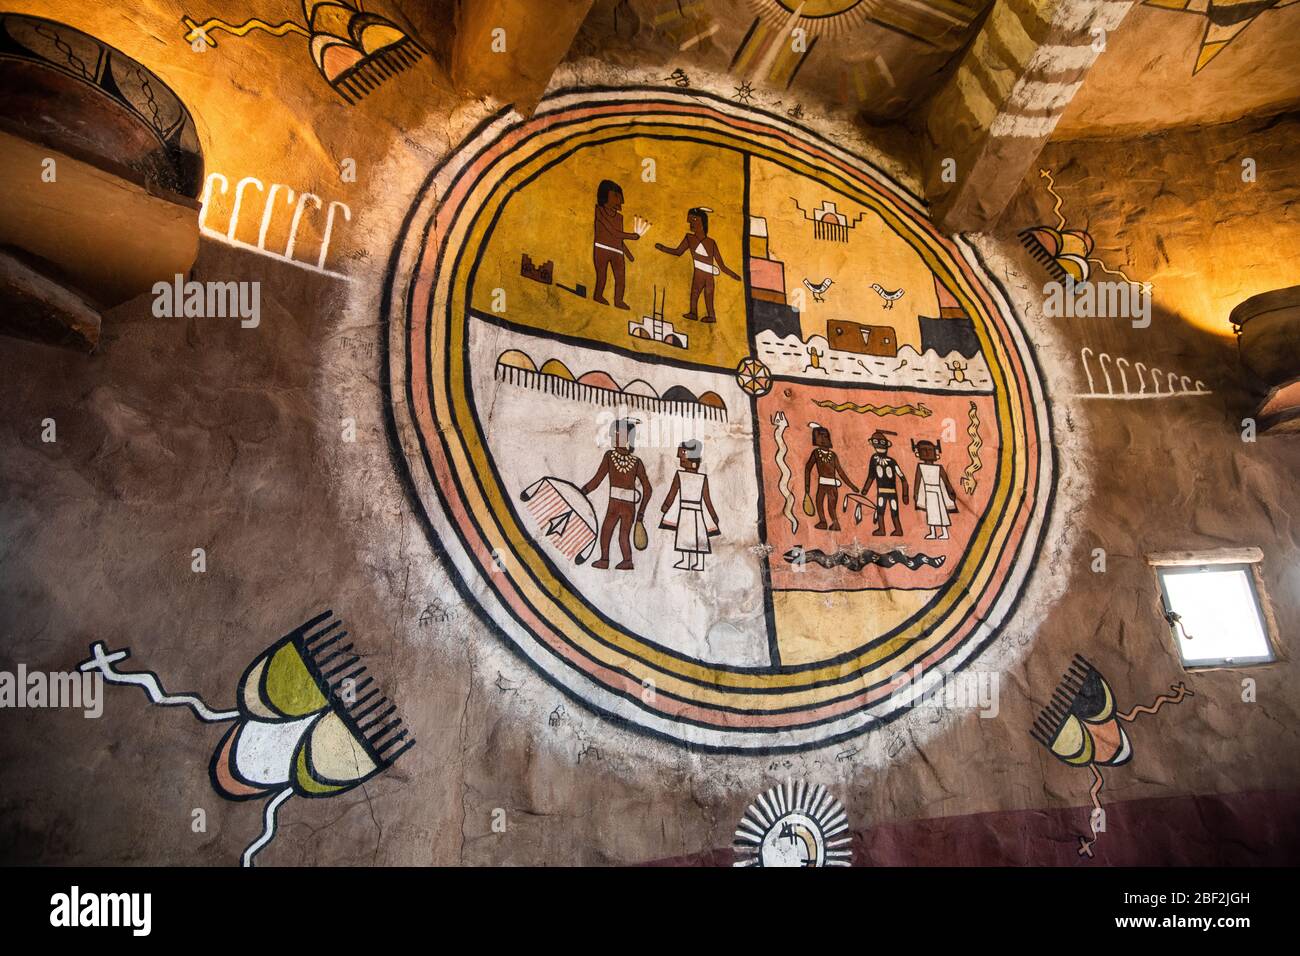 GRAND CANYON, ARIZONA - 6. NOVEMBER 2017 - Kunst der Ureinwohner Amerikas  schmückt das Innere des Wachturms South Rim, Grand Canyon National Park,  Arizona Stockfotografie - Alamy